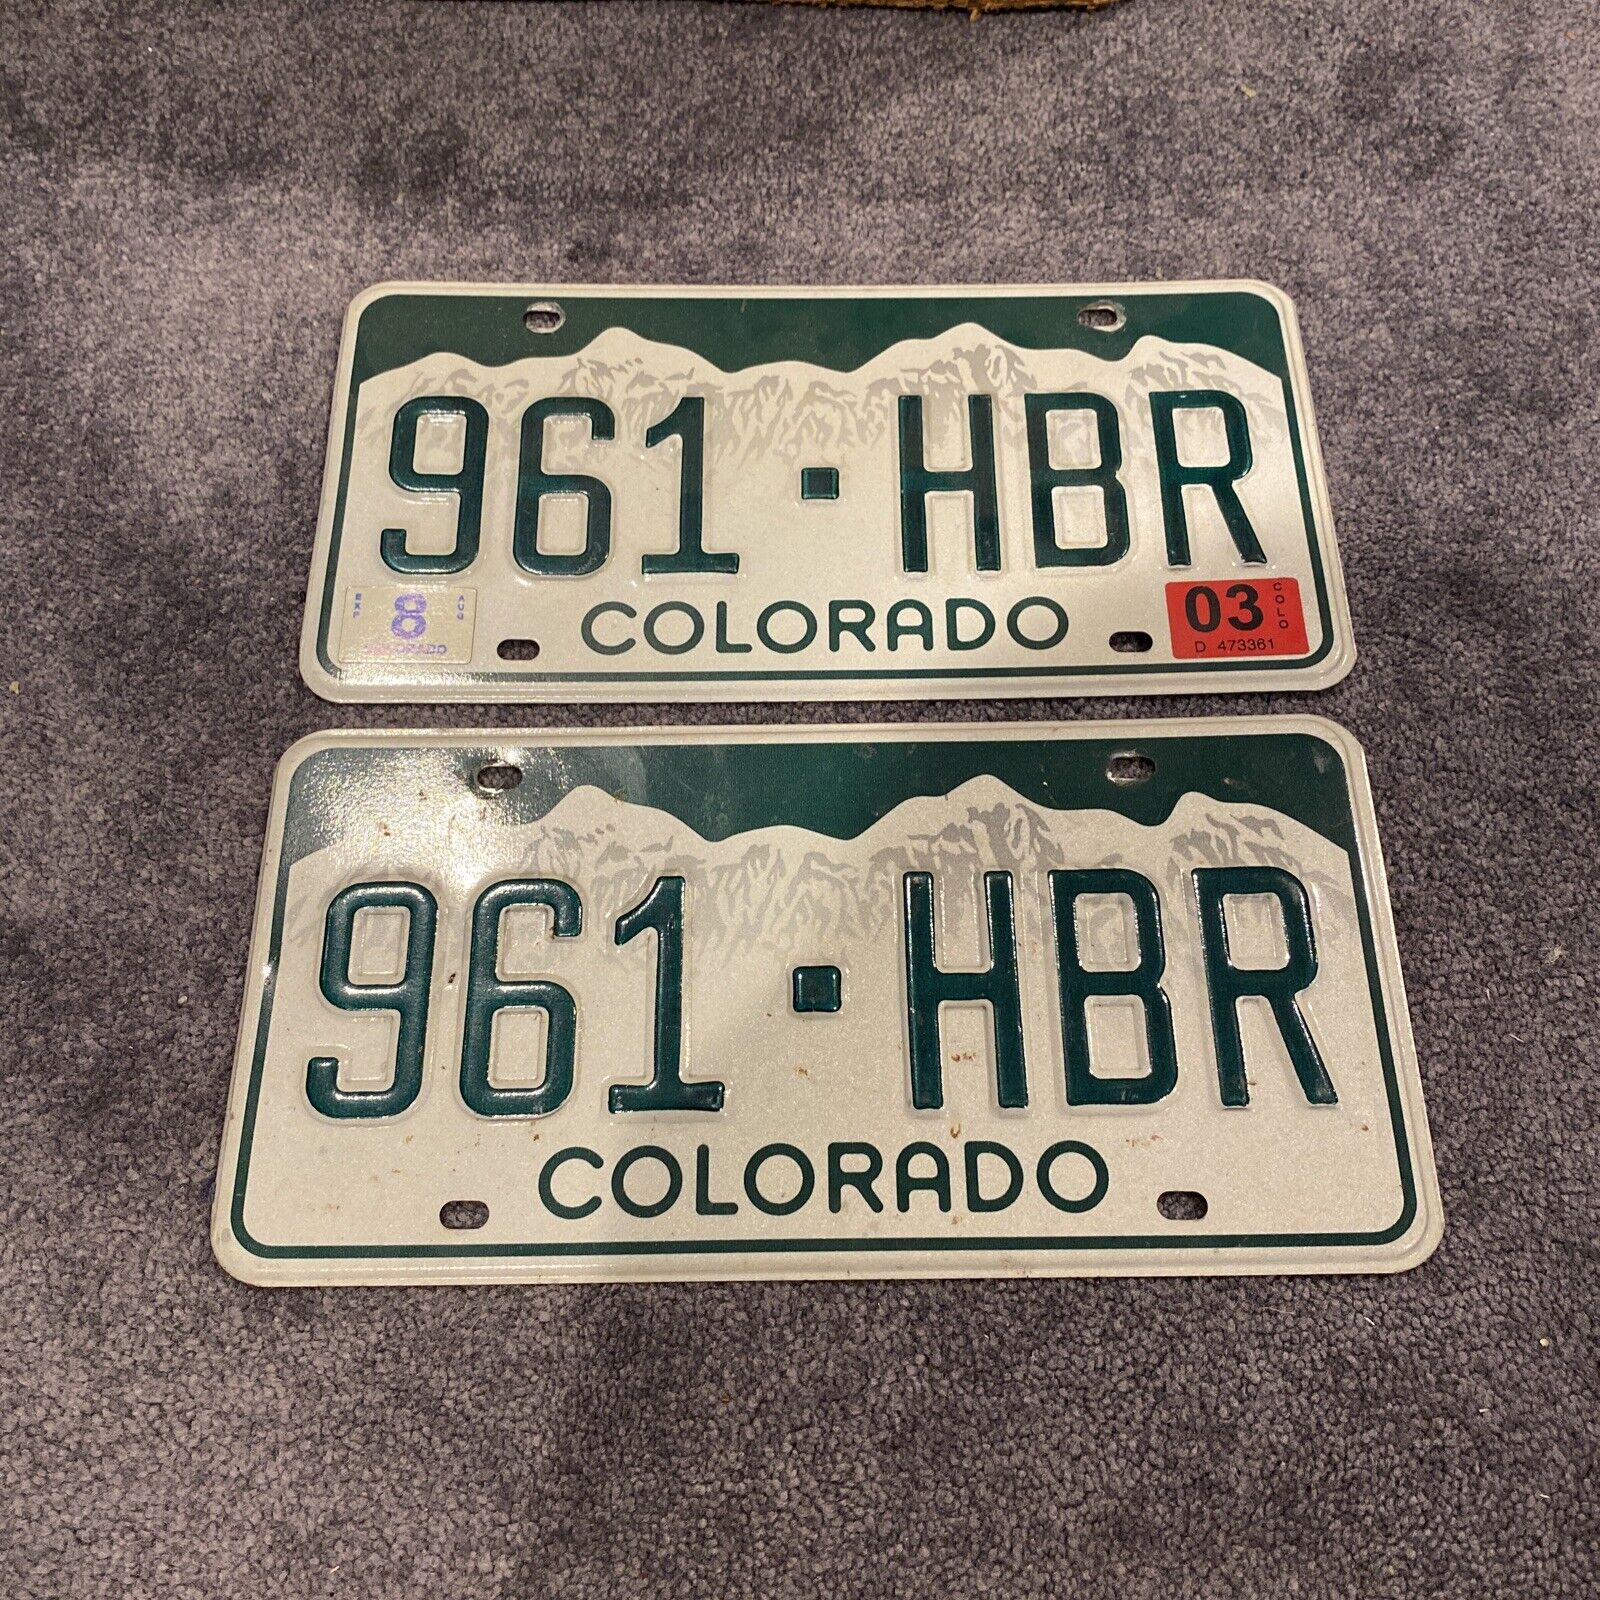 (1) Trendy Pair of Colorado License Plates 961 - HBR Excellent Condition